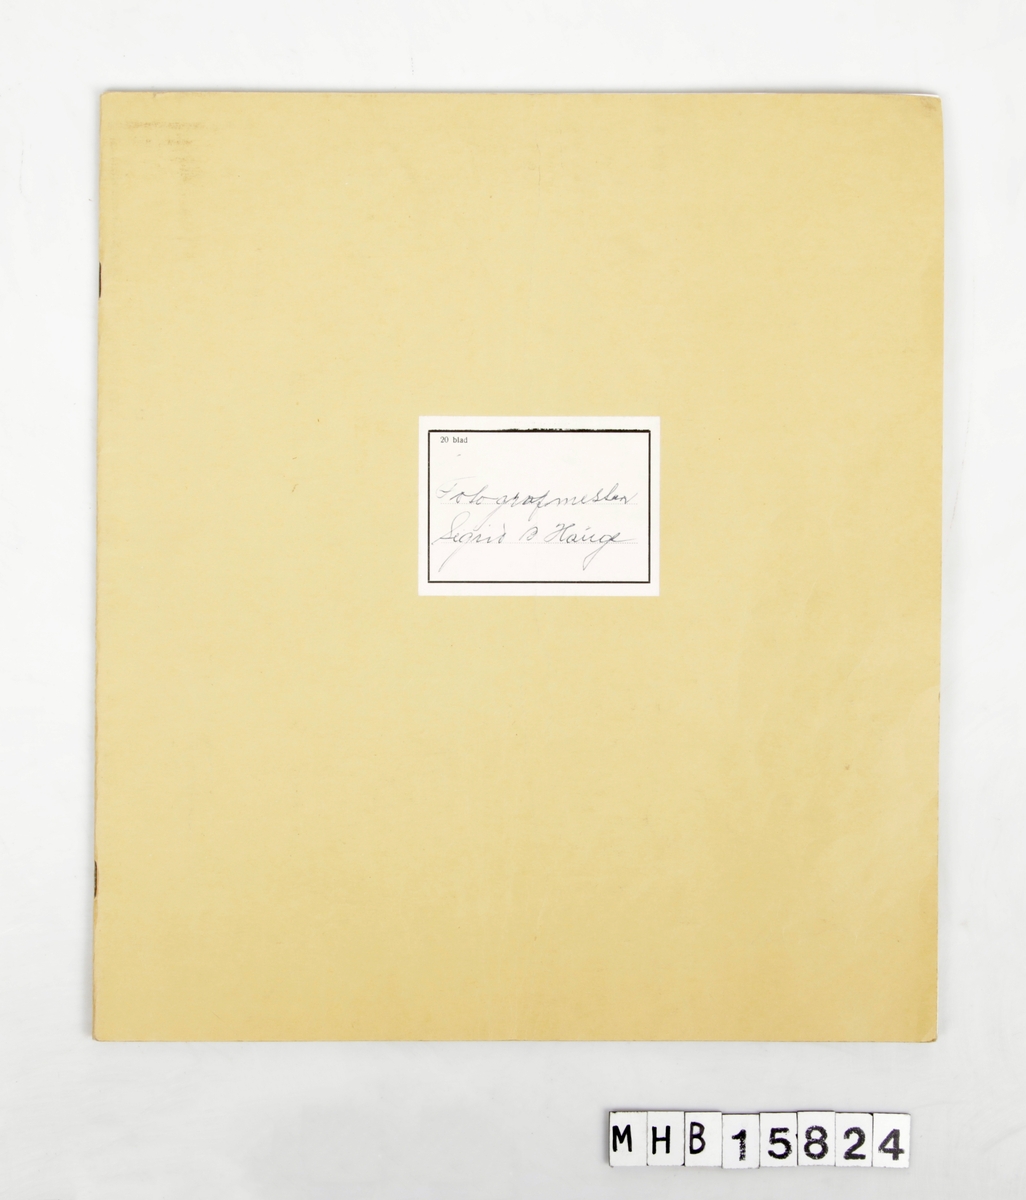 Et hefte med påskriften; " fotografmester Sigrid B. Hauge", inneholder regnskap/kassabok(ubrukt), ligger tre dokumenter i heftet som omhandler regnskap. Mykt pappomslag, stiftet i ryggen.